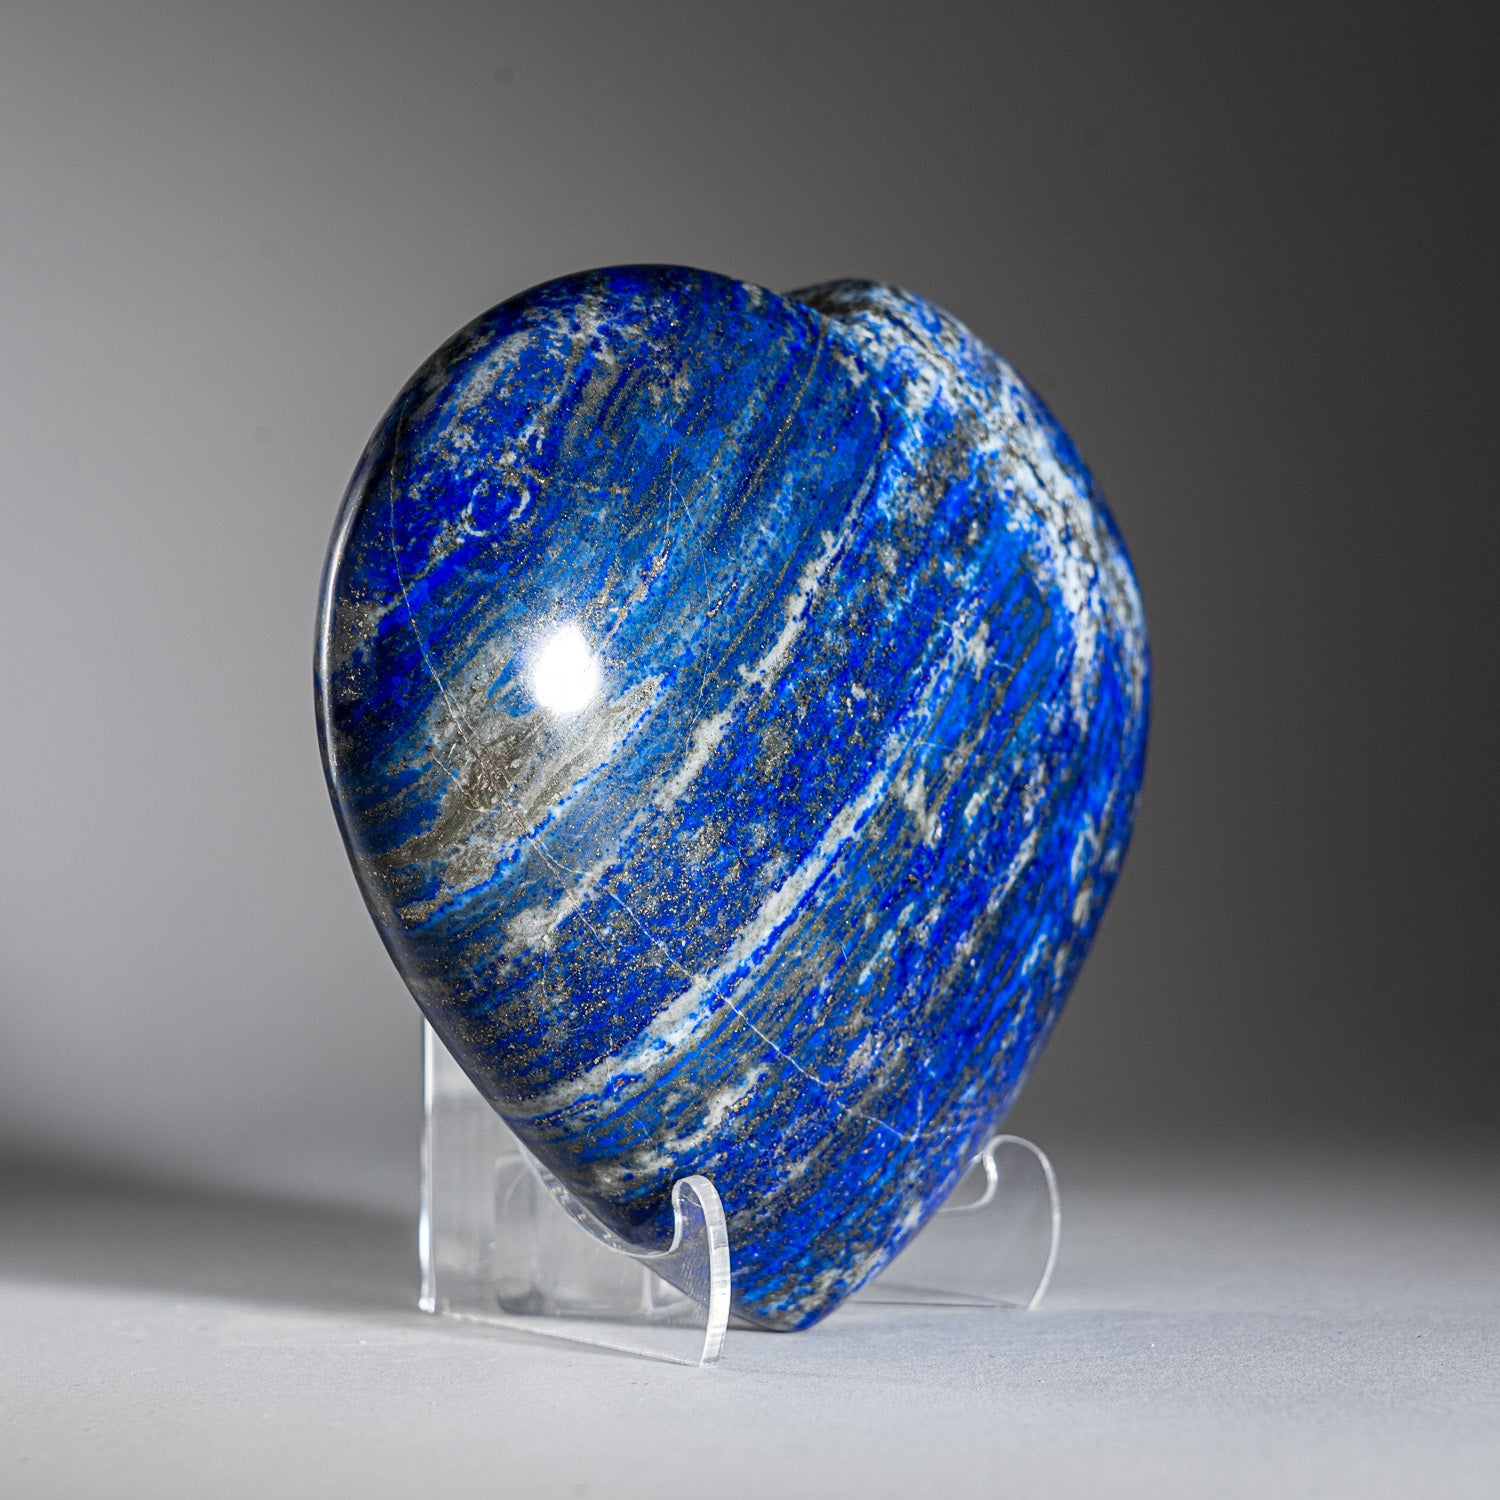 Genuine Polished Lapis Lazuli Heart with Acrylic Display Stand (2.8 lbs)